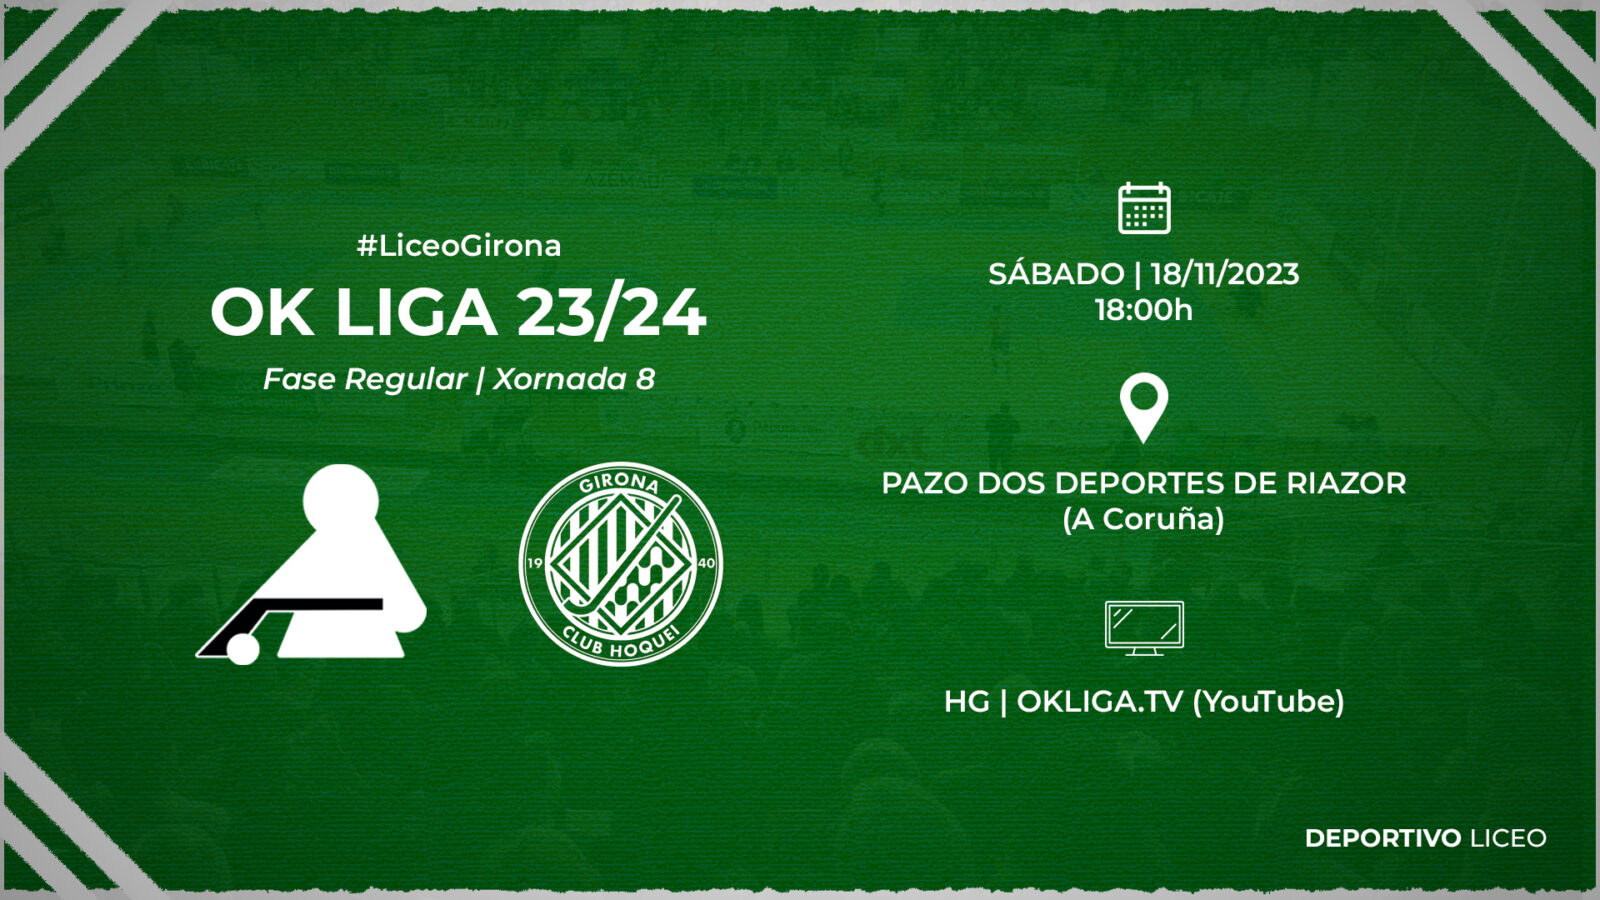 #LiceoGirona | ENTRADAS para la jornada 8 de la OK Liga 23/24